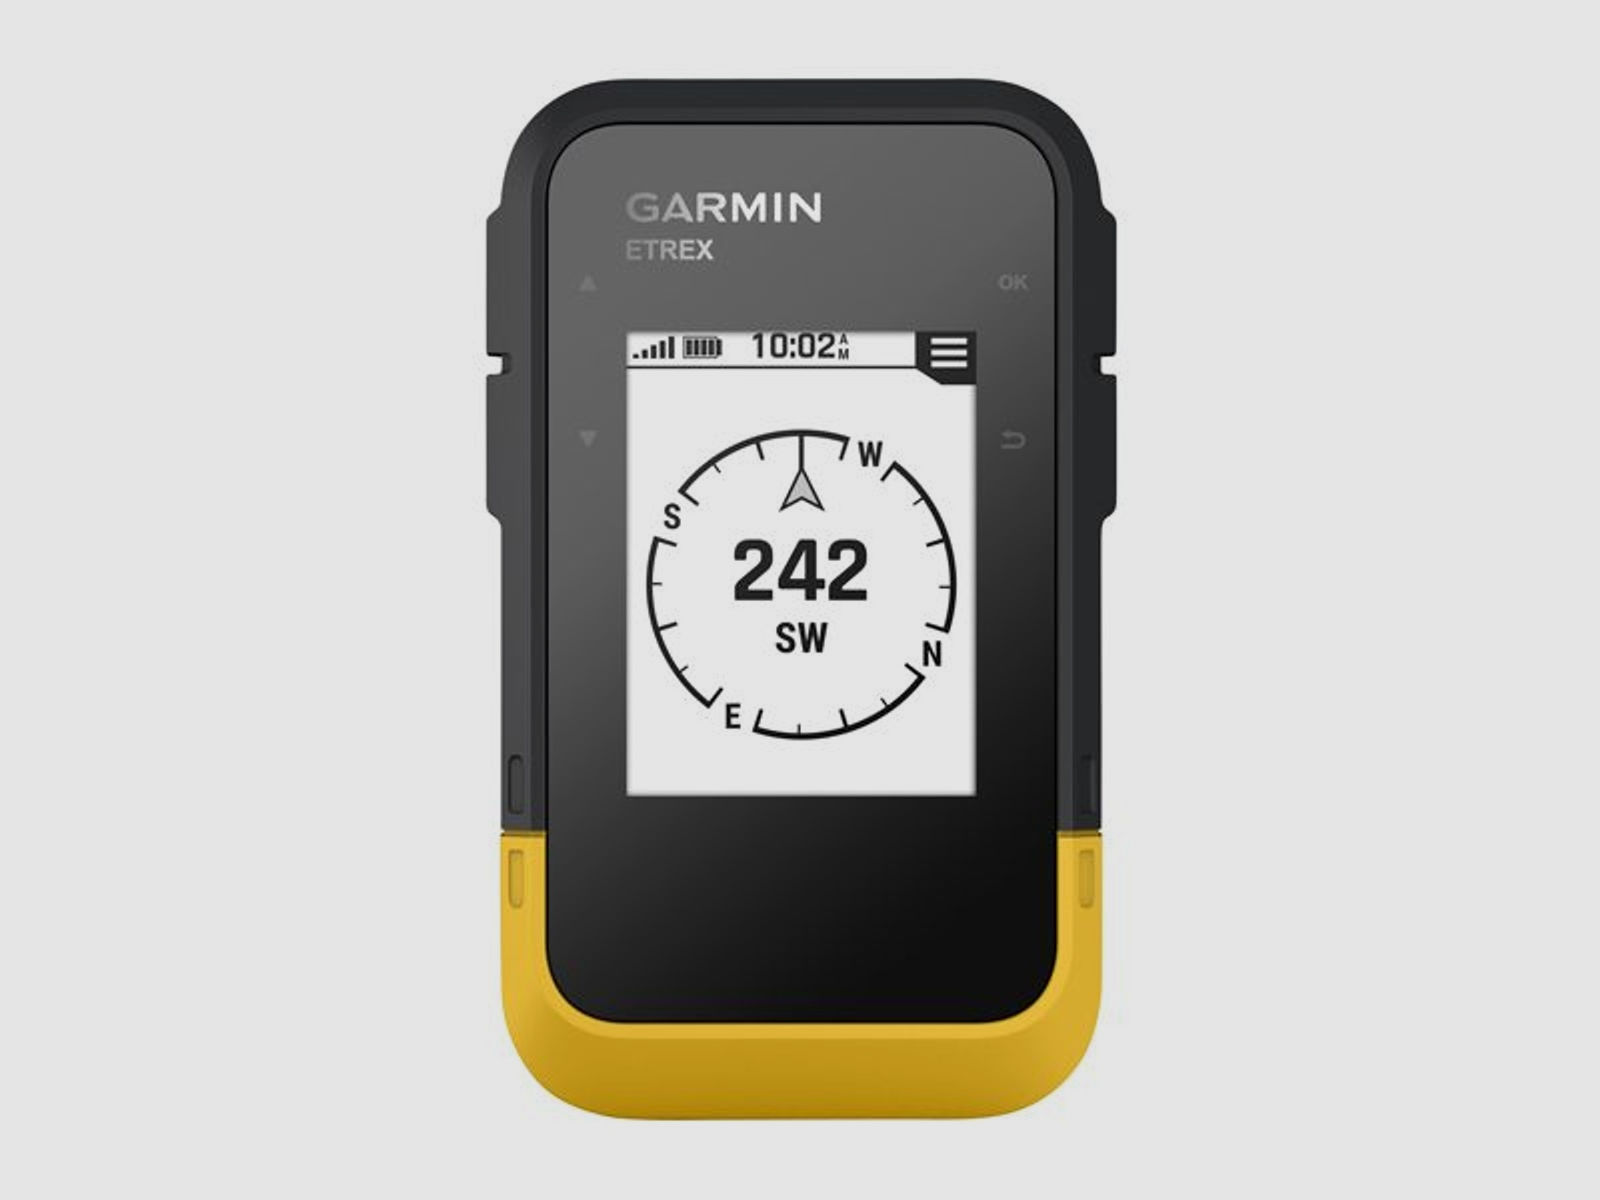 Garmin Garmin GPS-Handgerät eTrex SE schwarz gelb